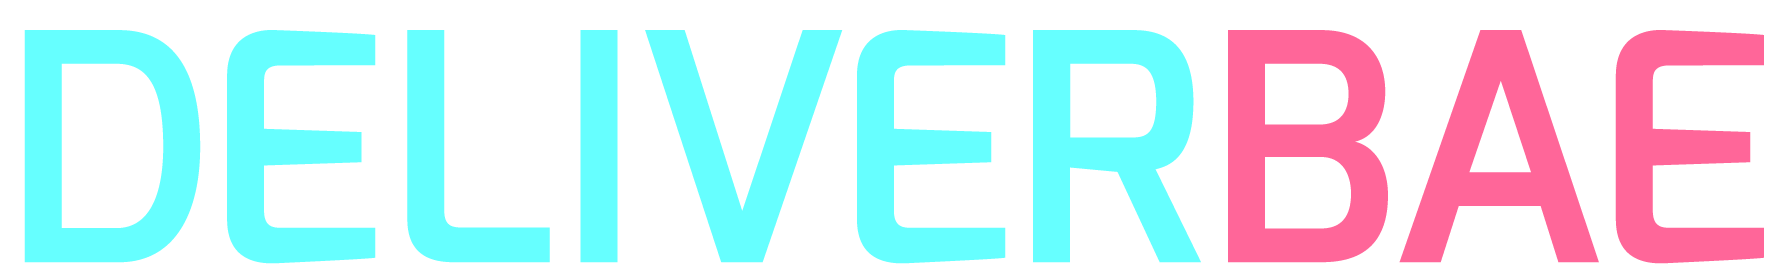 Deliverbae new logo exo